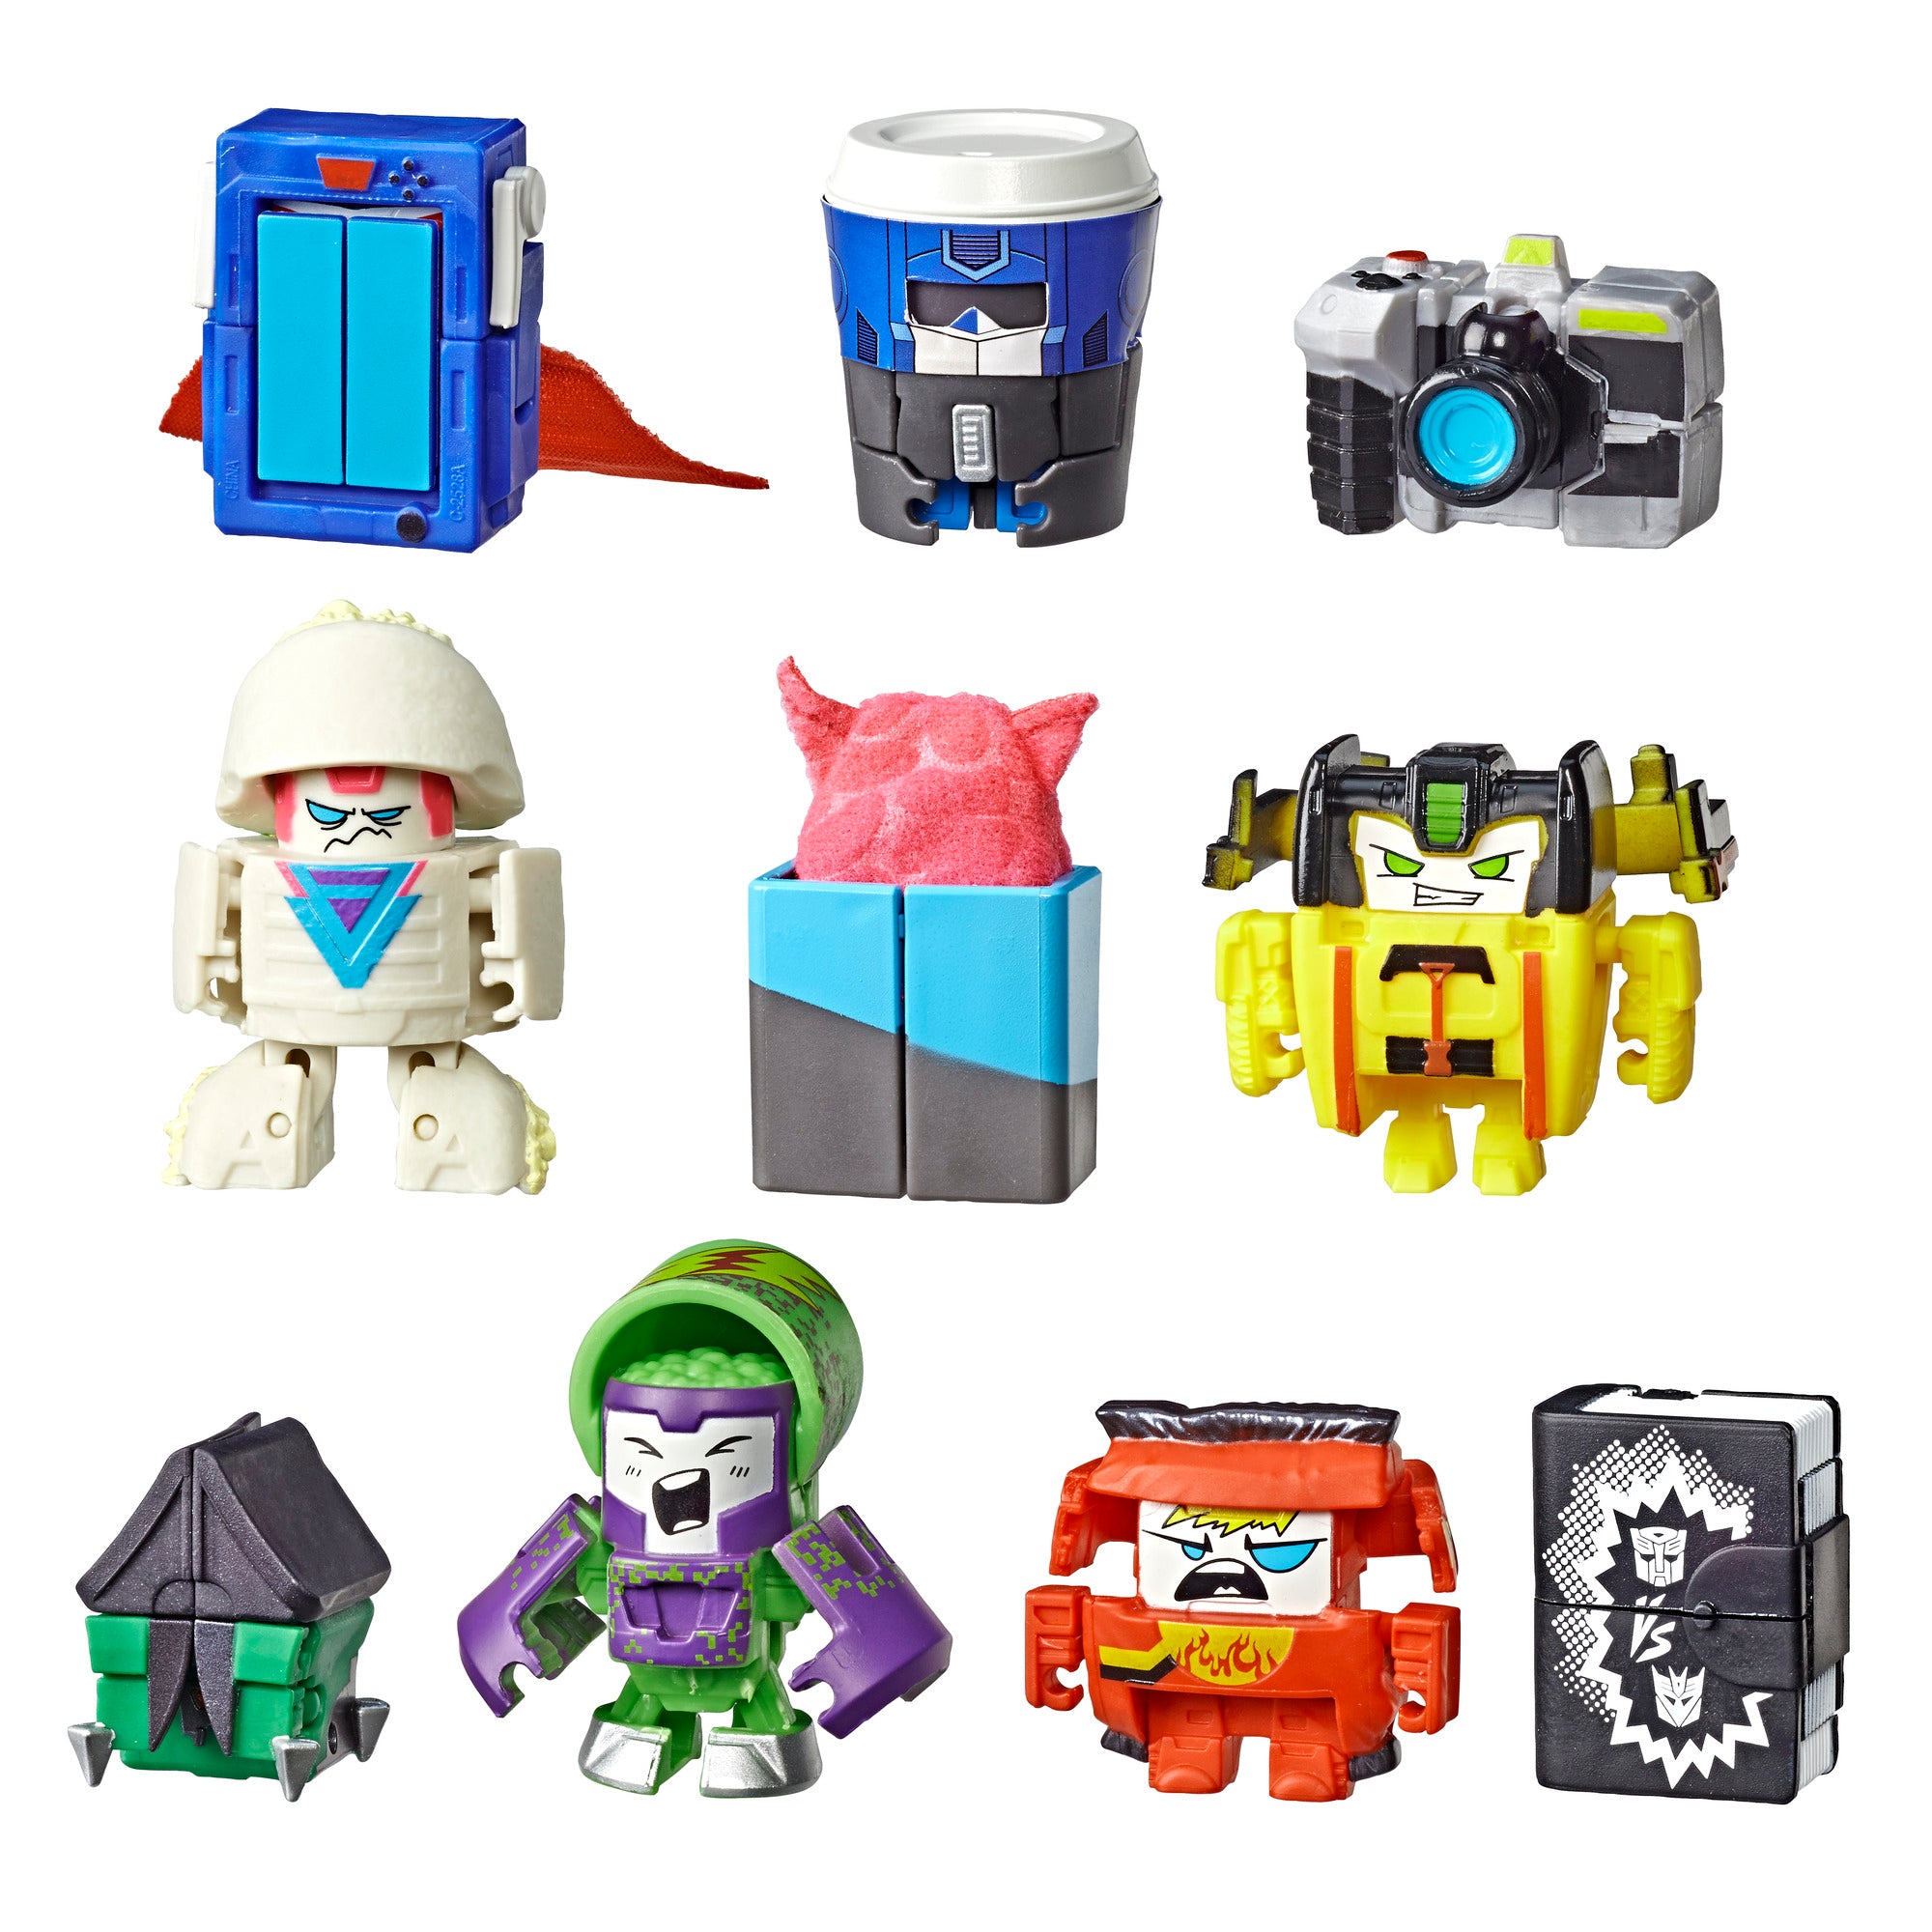 transformers botbots mall